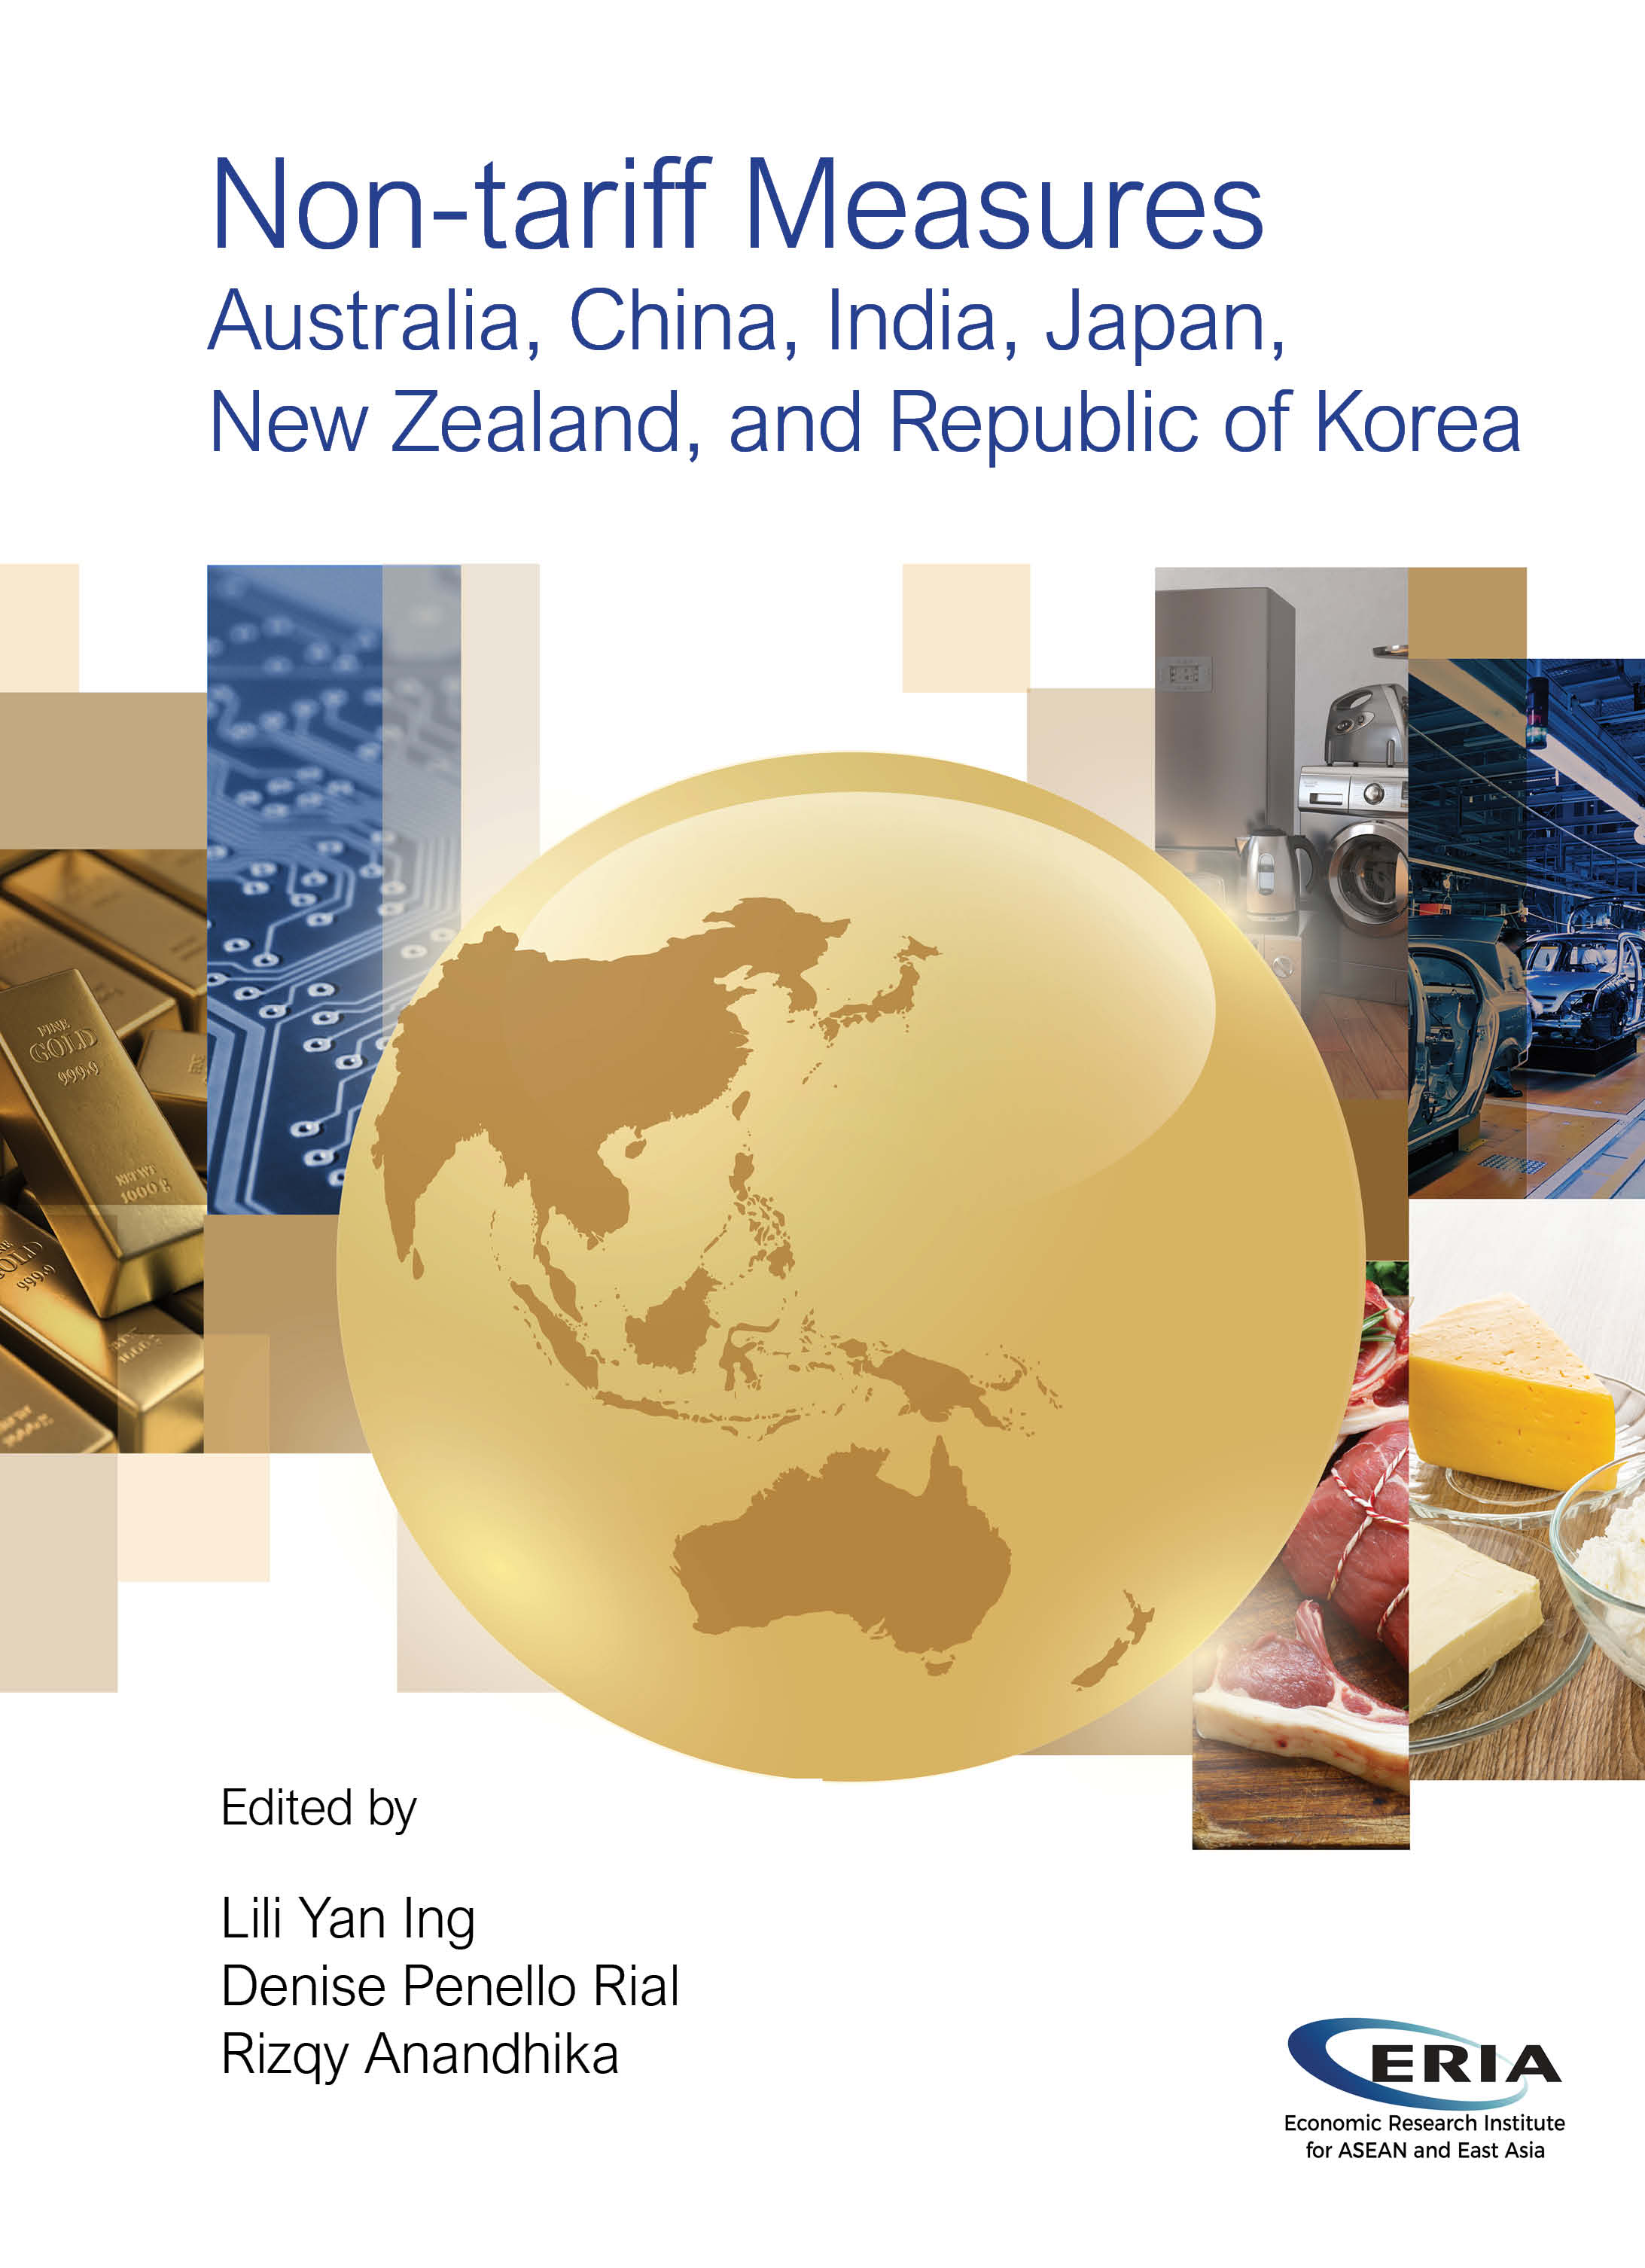 Non-tariff Measures Australia, China, India, Japan, New Zealand, Republic of Korea